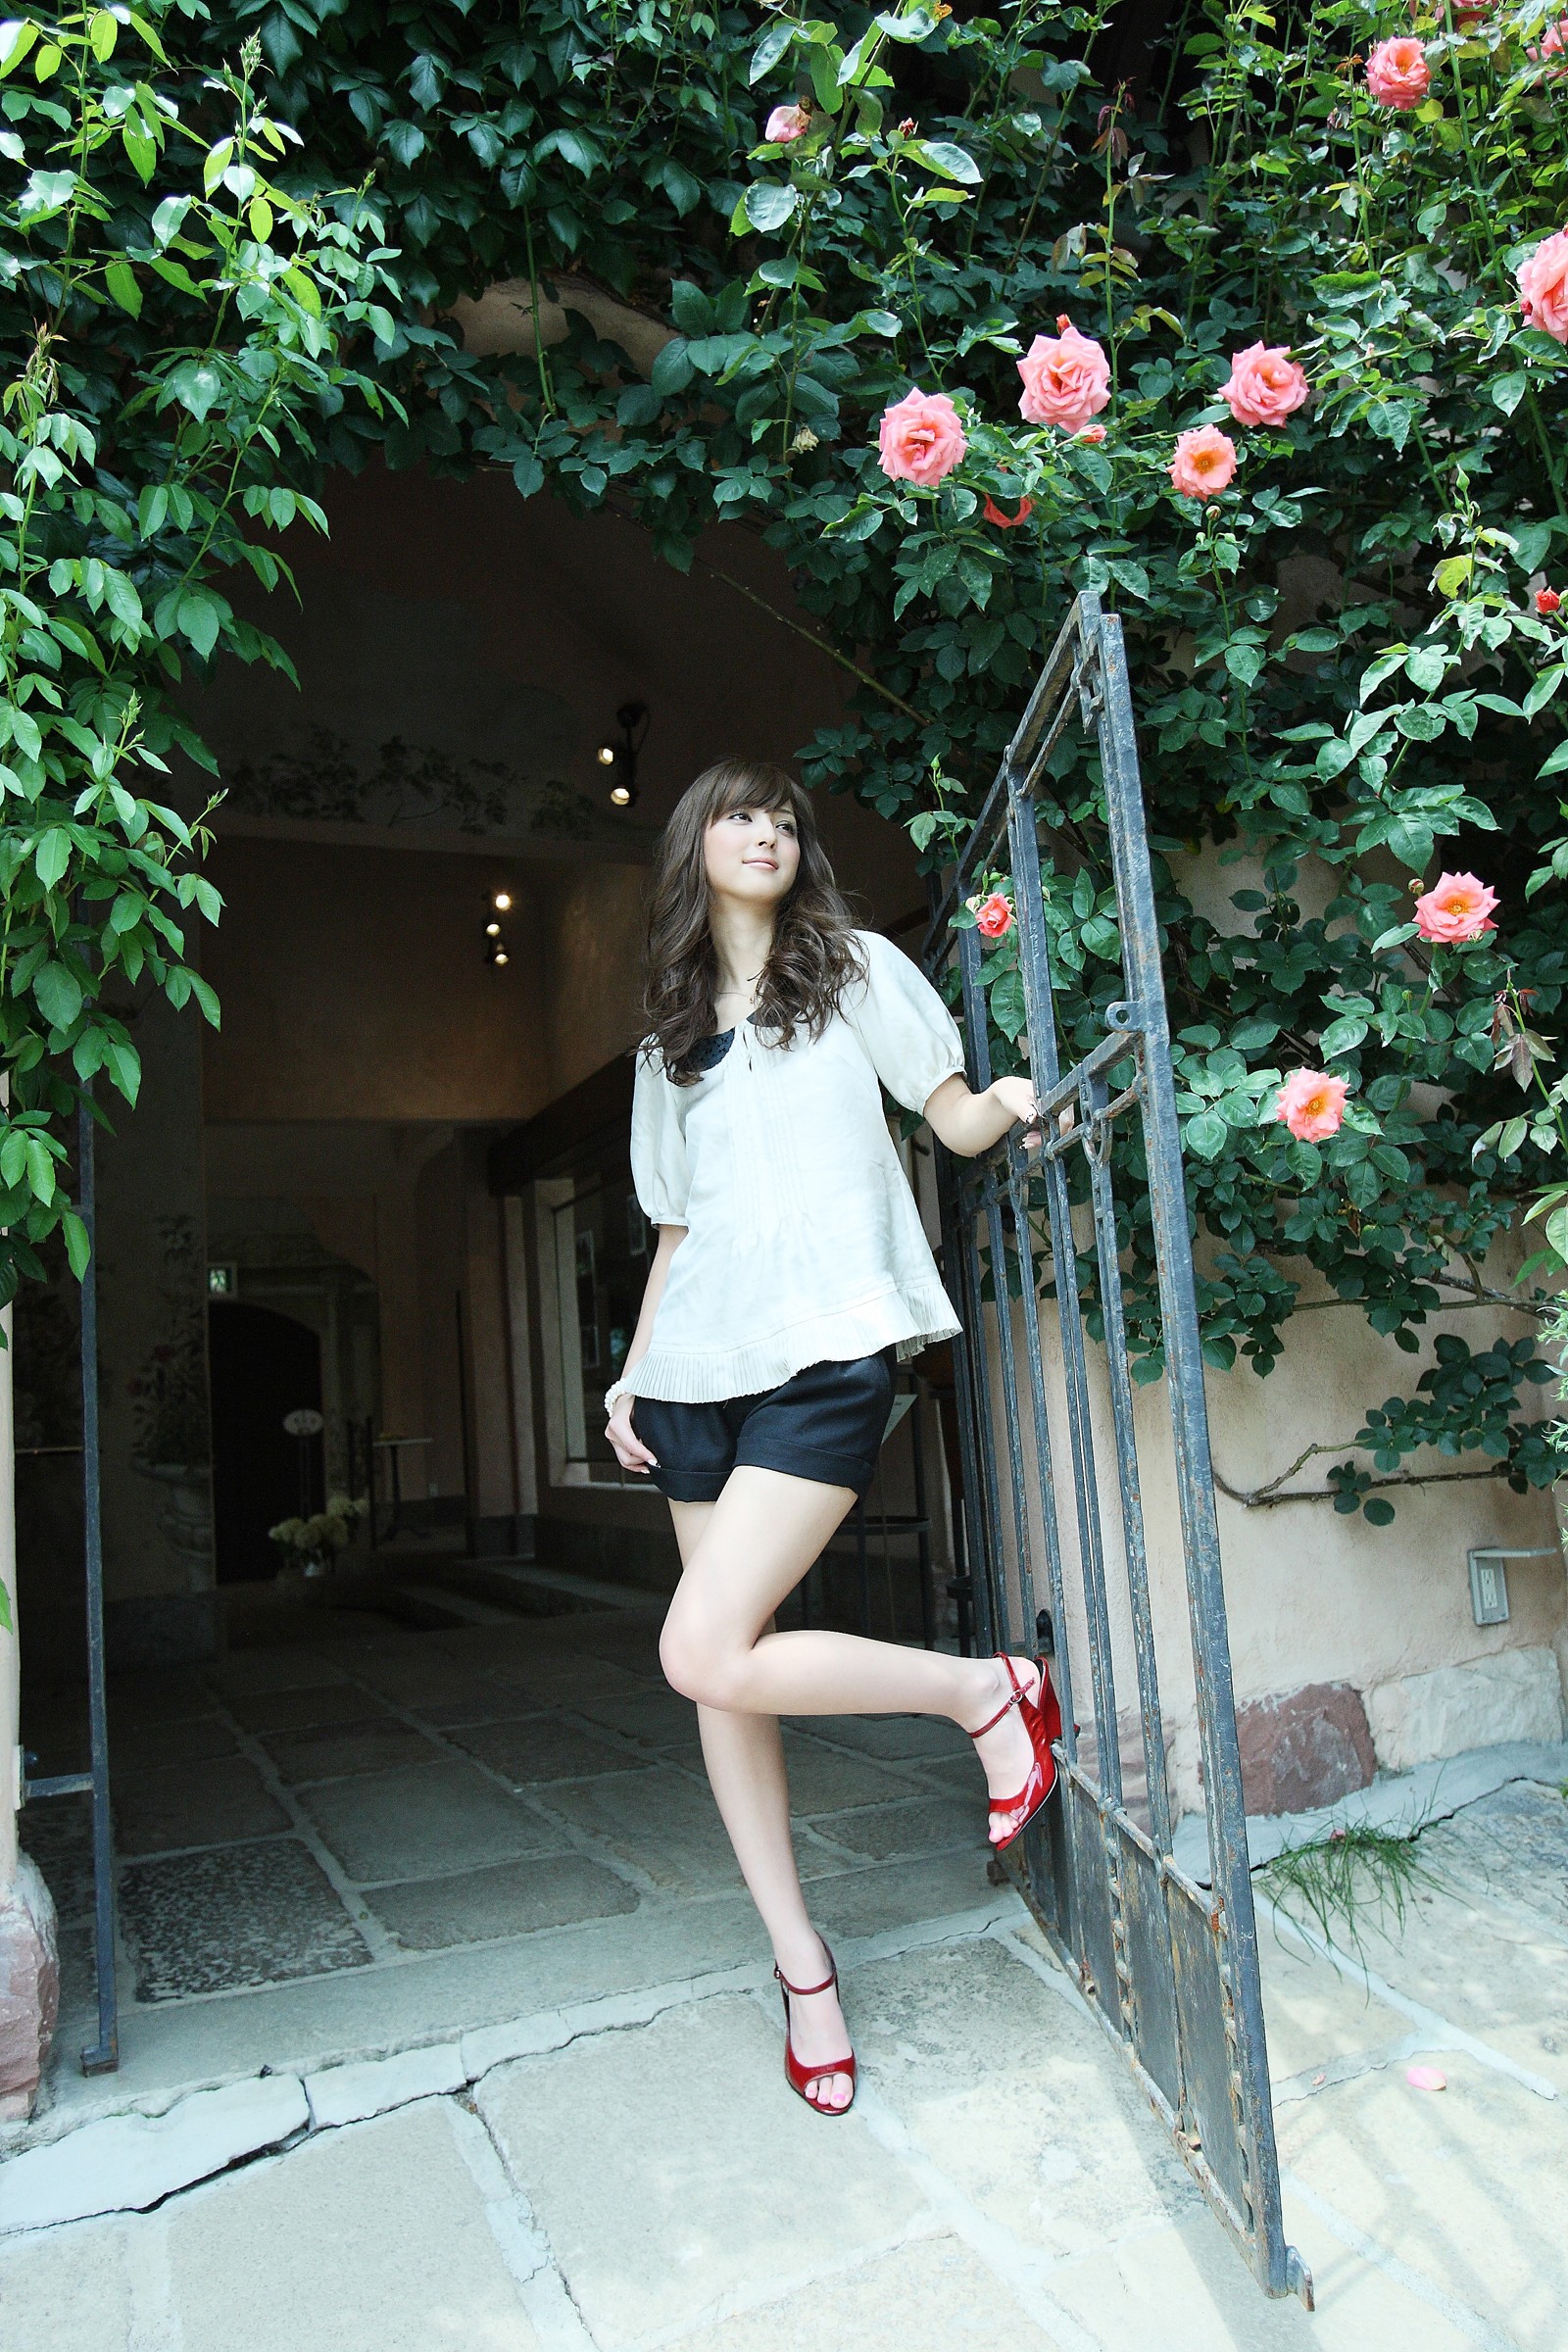 Sasaki Nozomi Model Asian Japanese Women Women Outdoors Rose Brunette 1600x2400